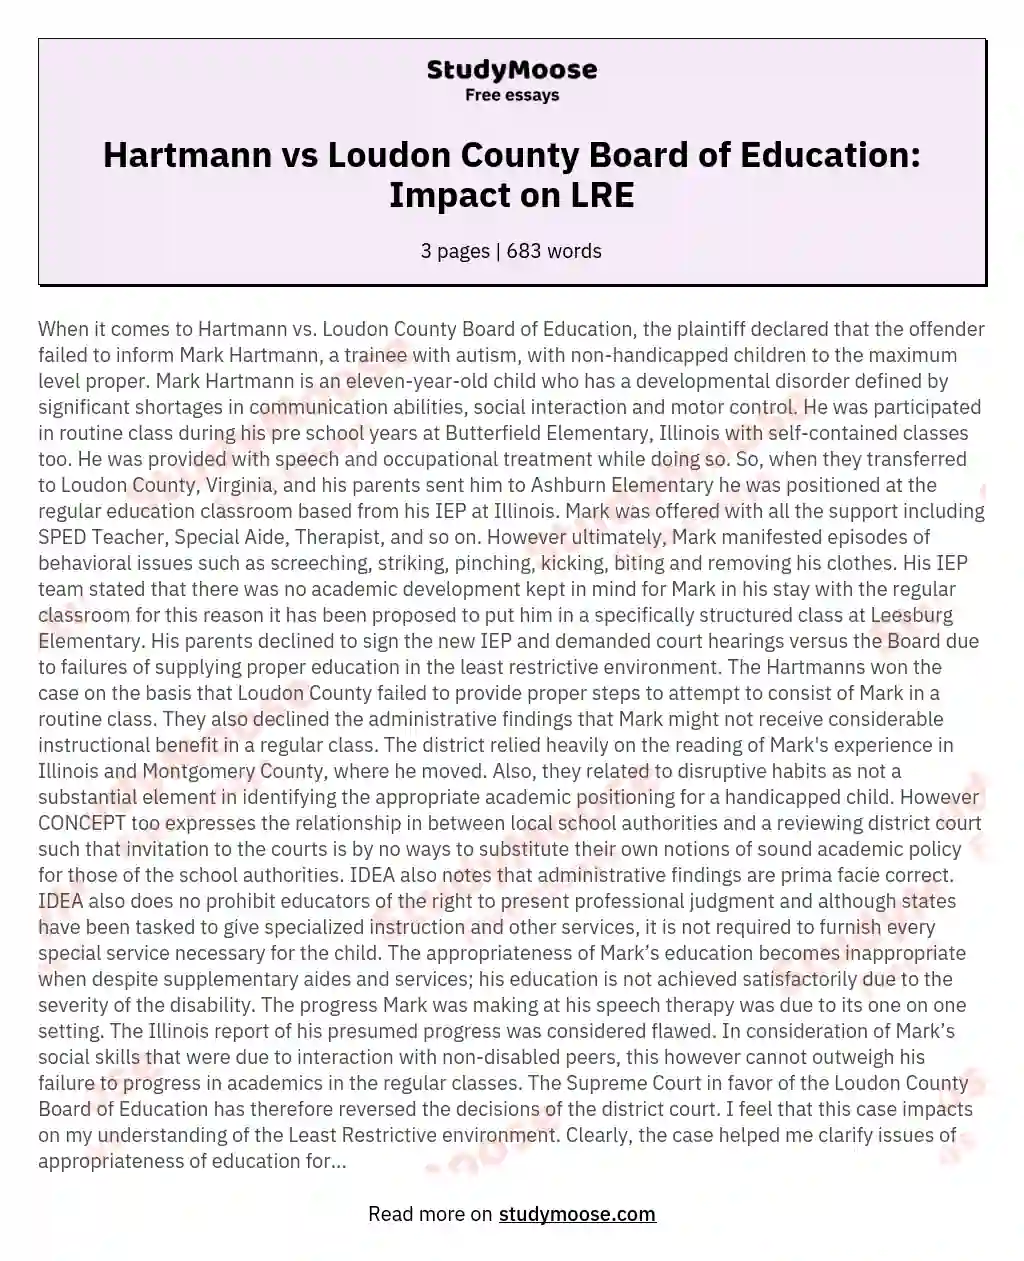 Hartmann vs Loudon County Board of Education: Impact on LRE essay